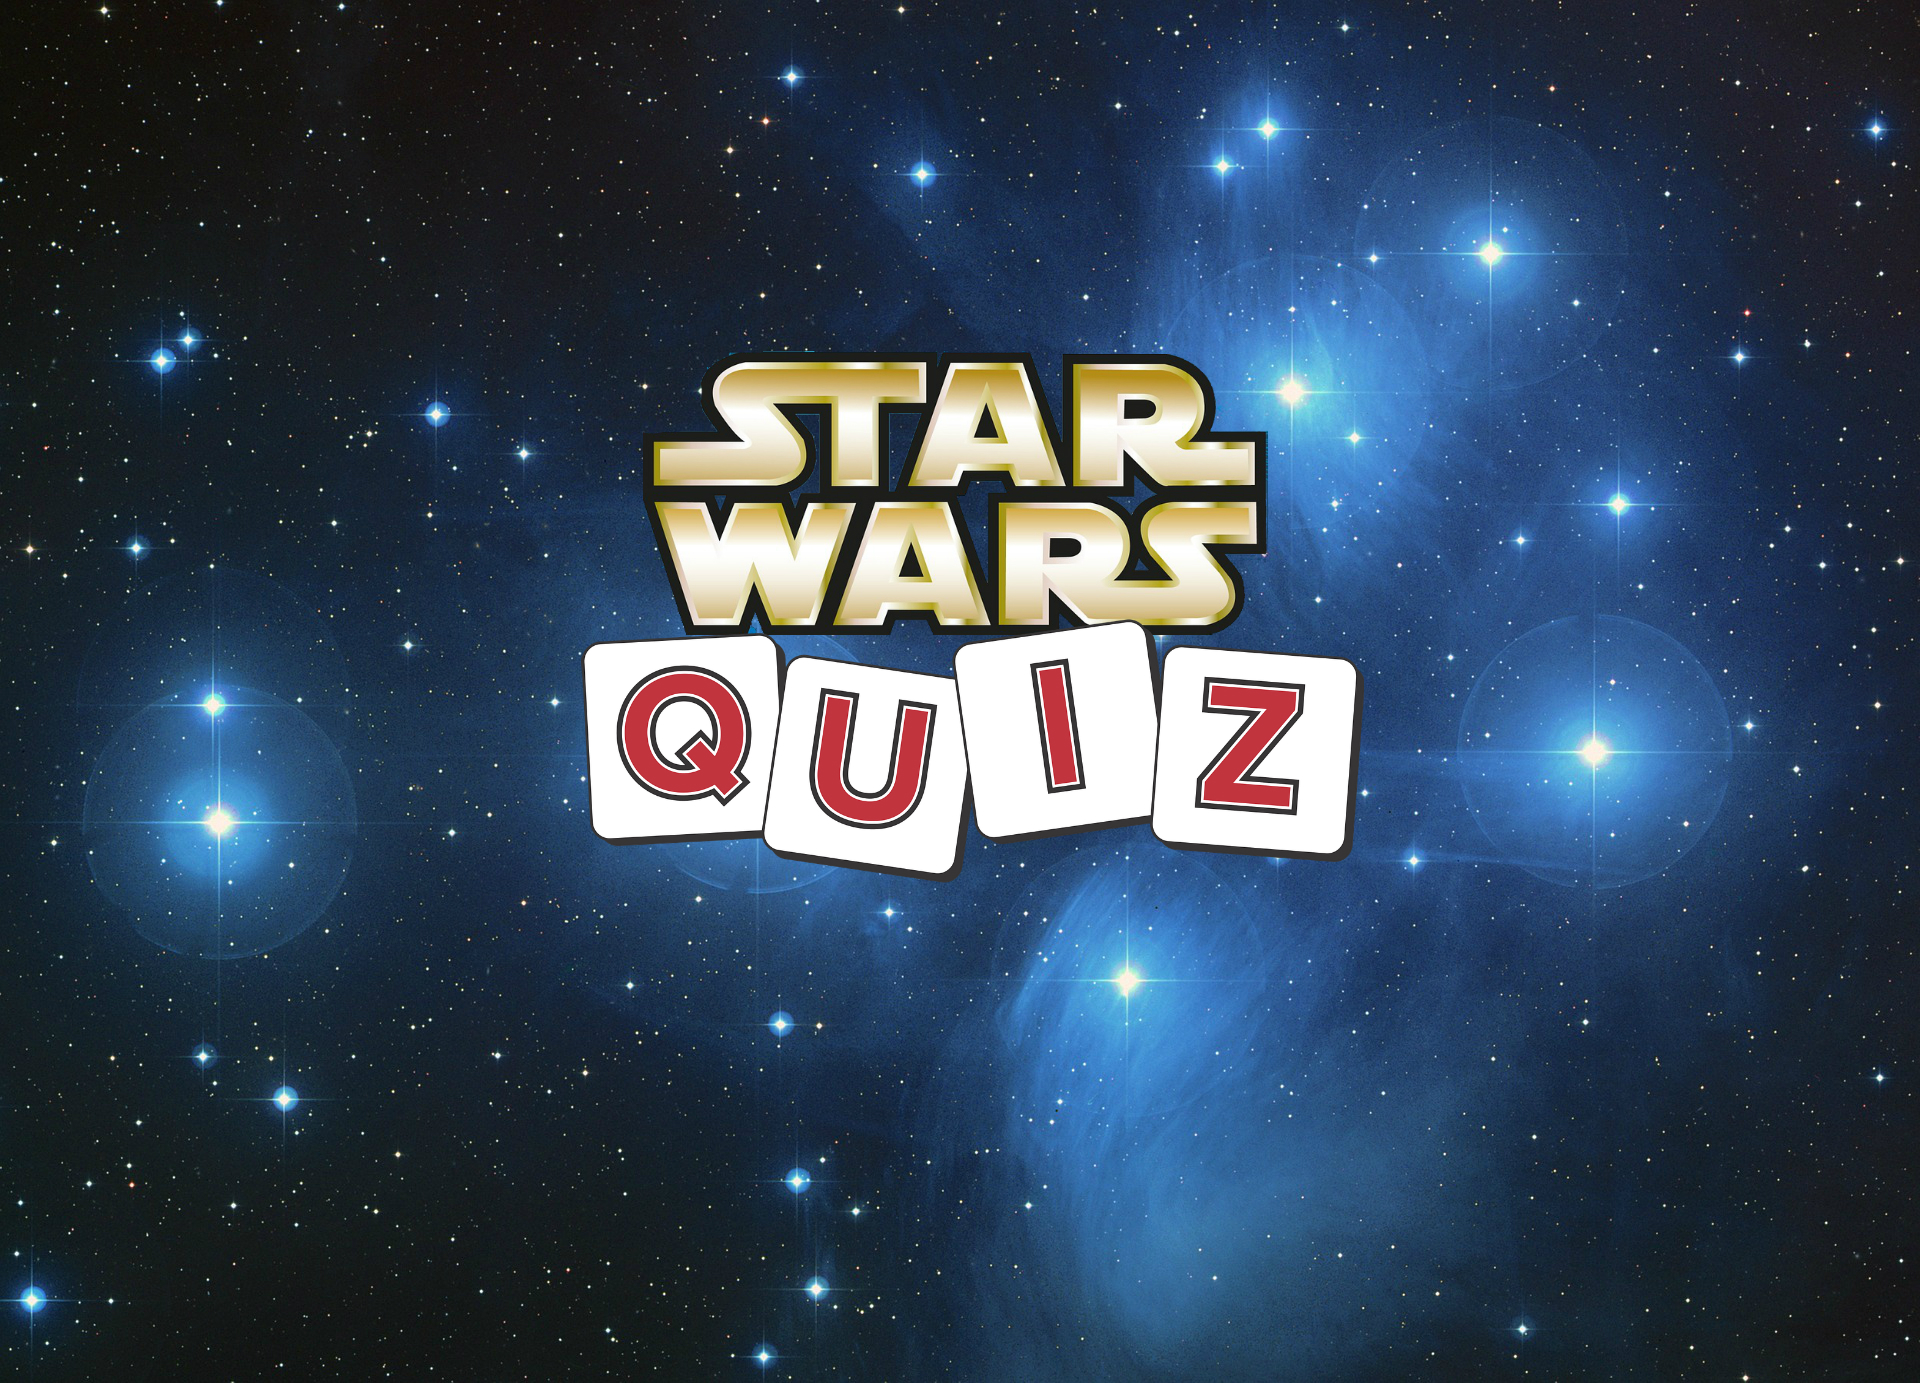 Star Wars quiz